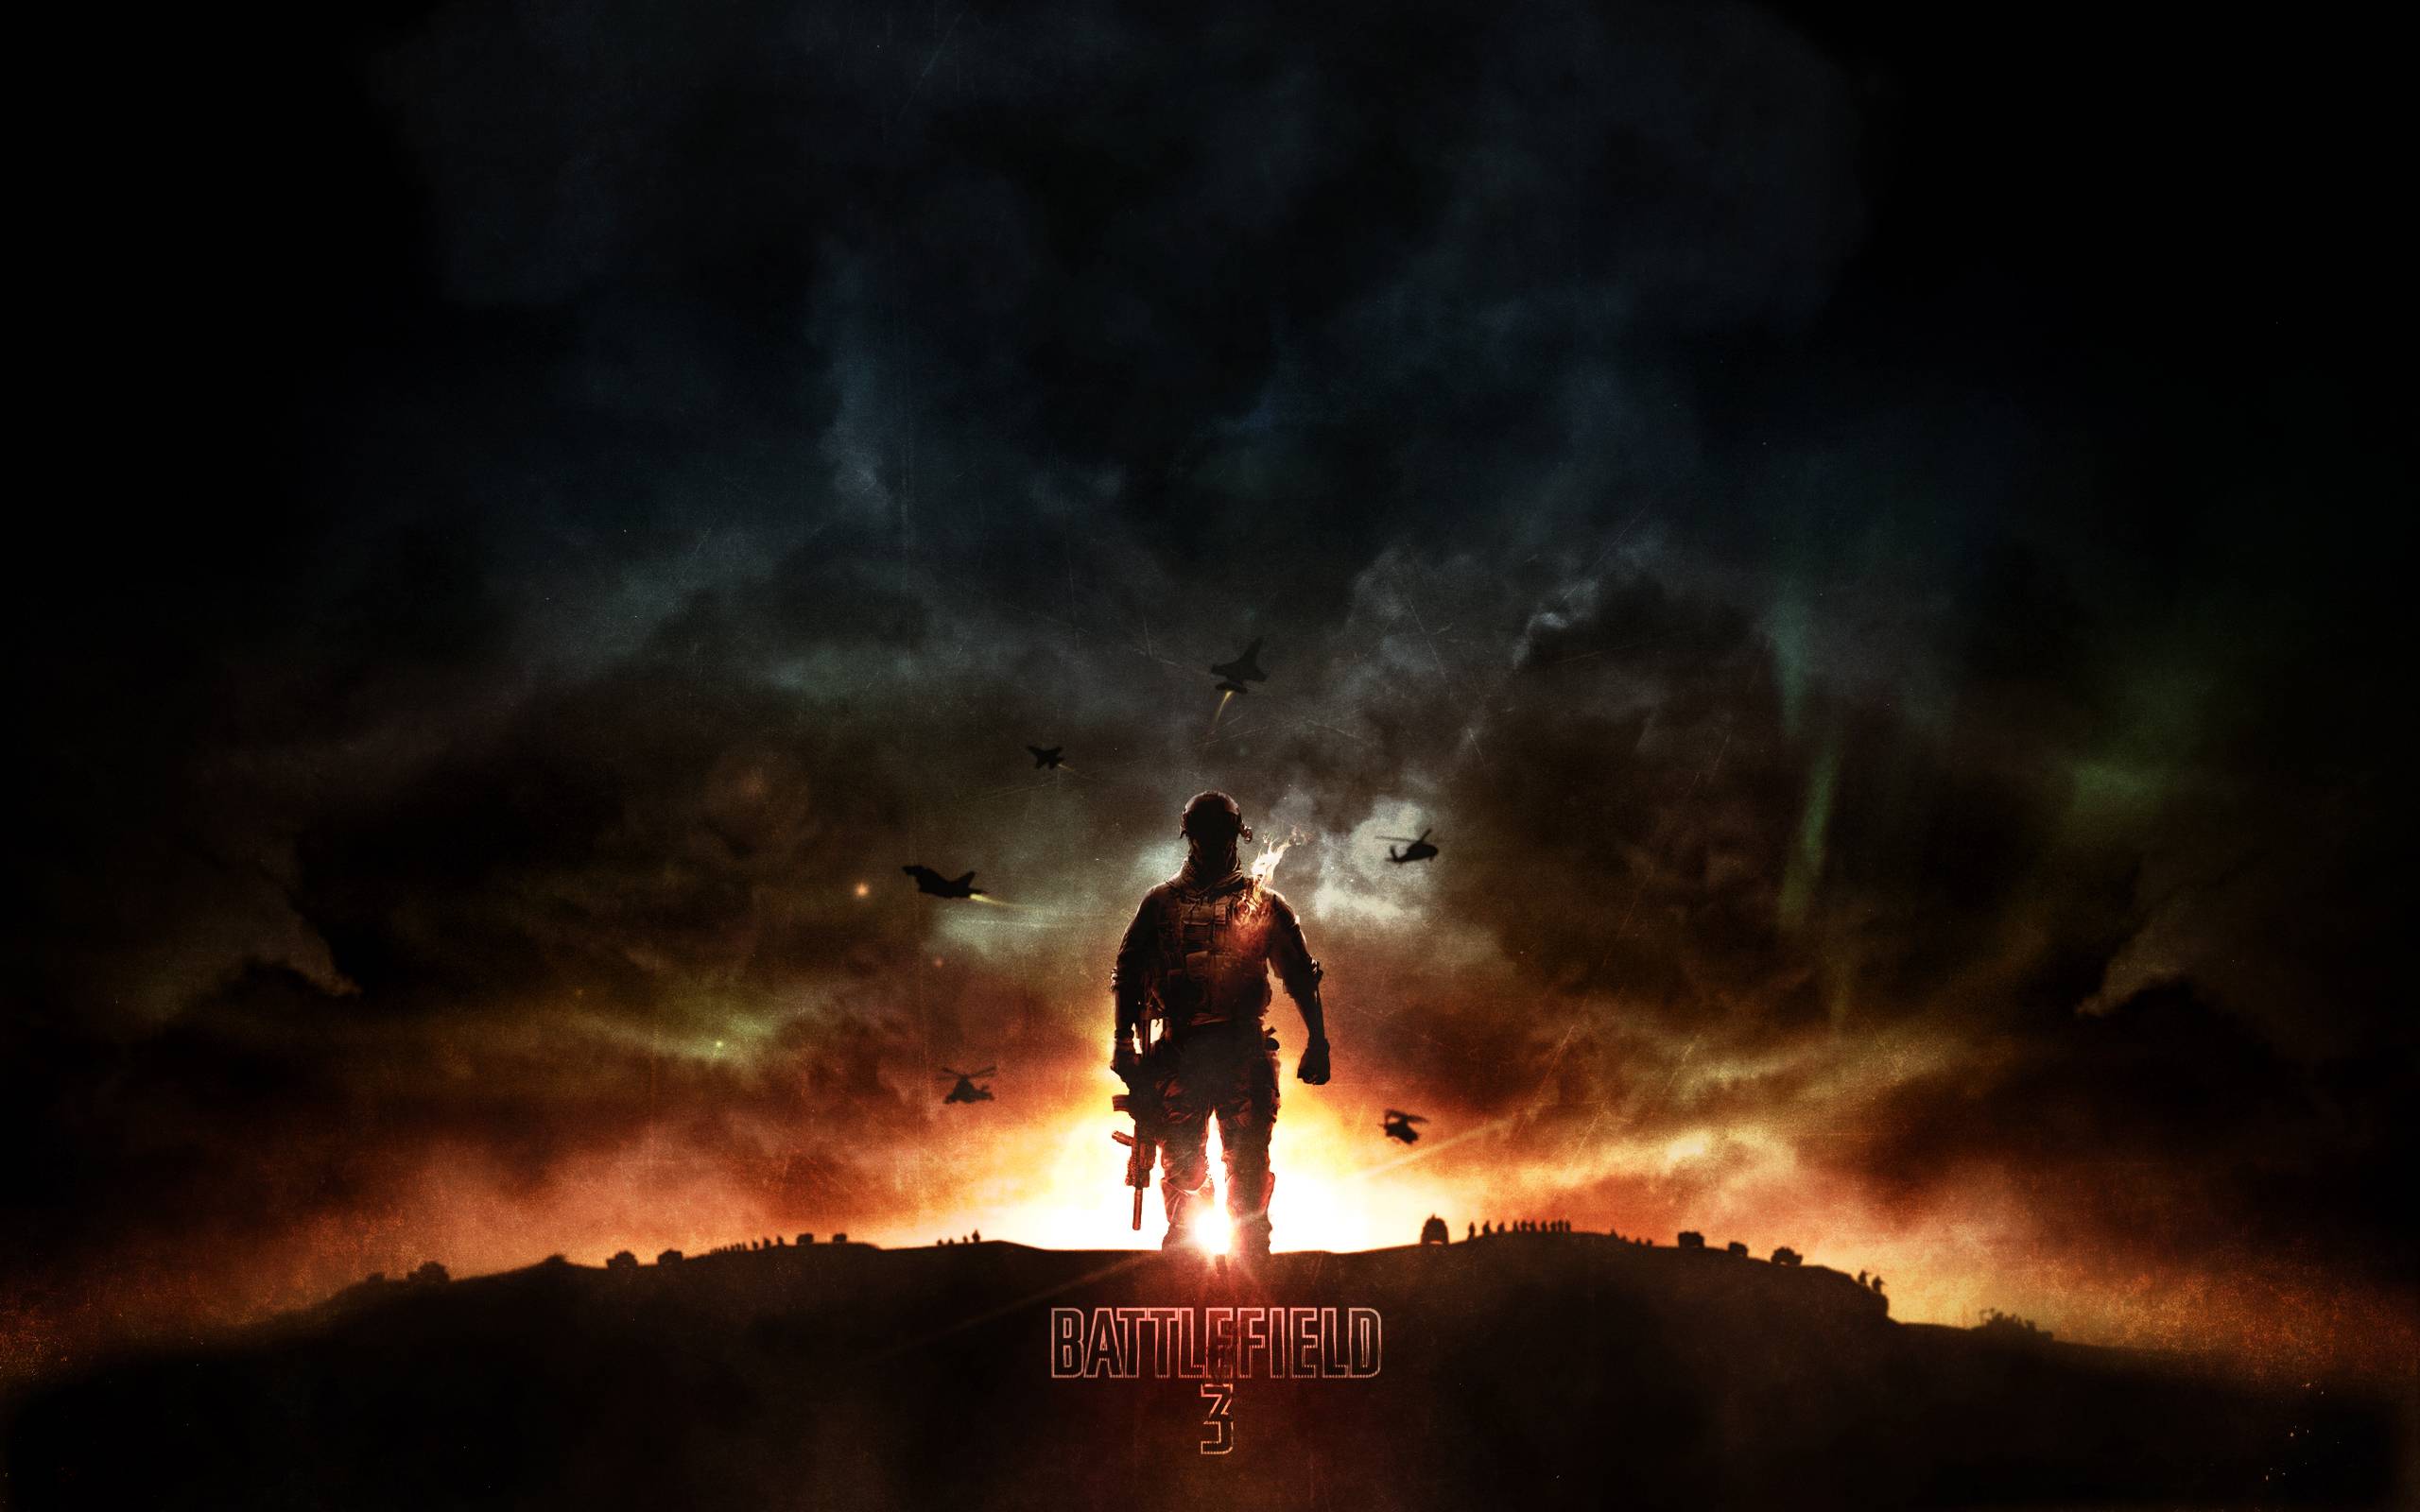 Battlefield 3 Wallpapers 1080p - Wallpaper Cave